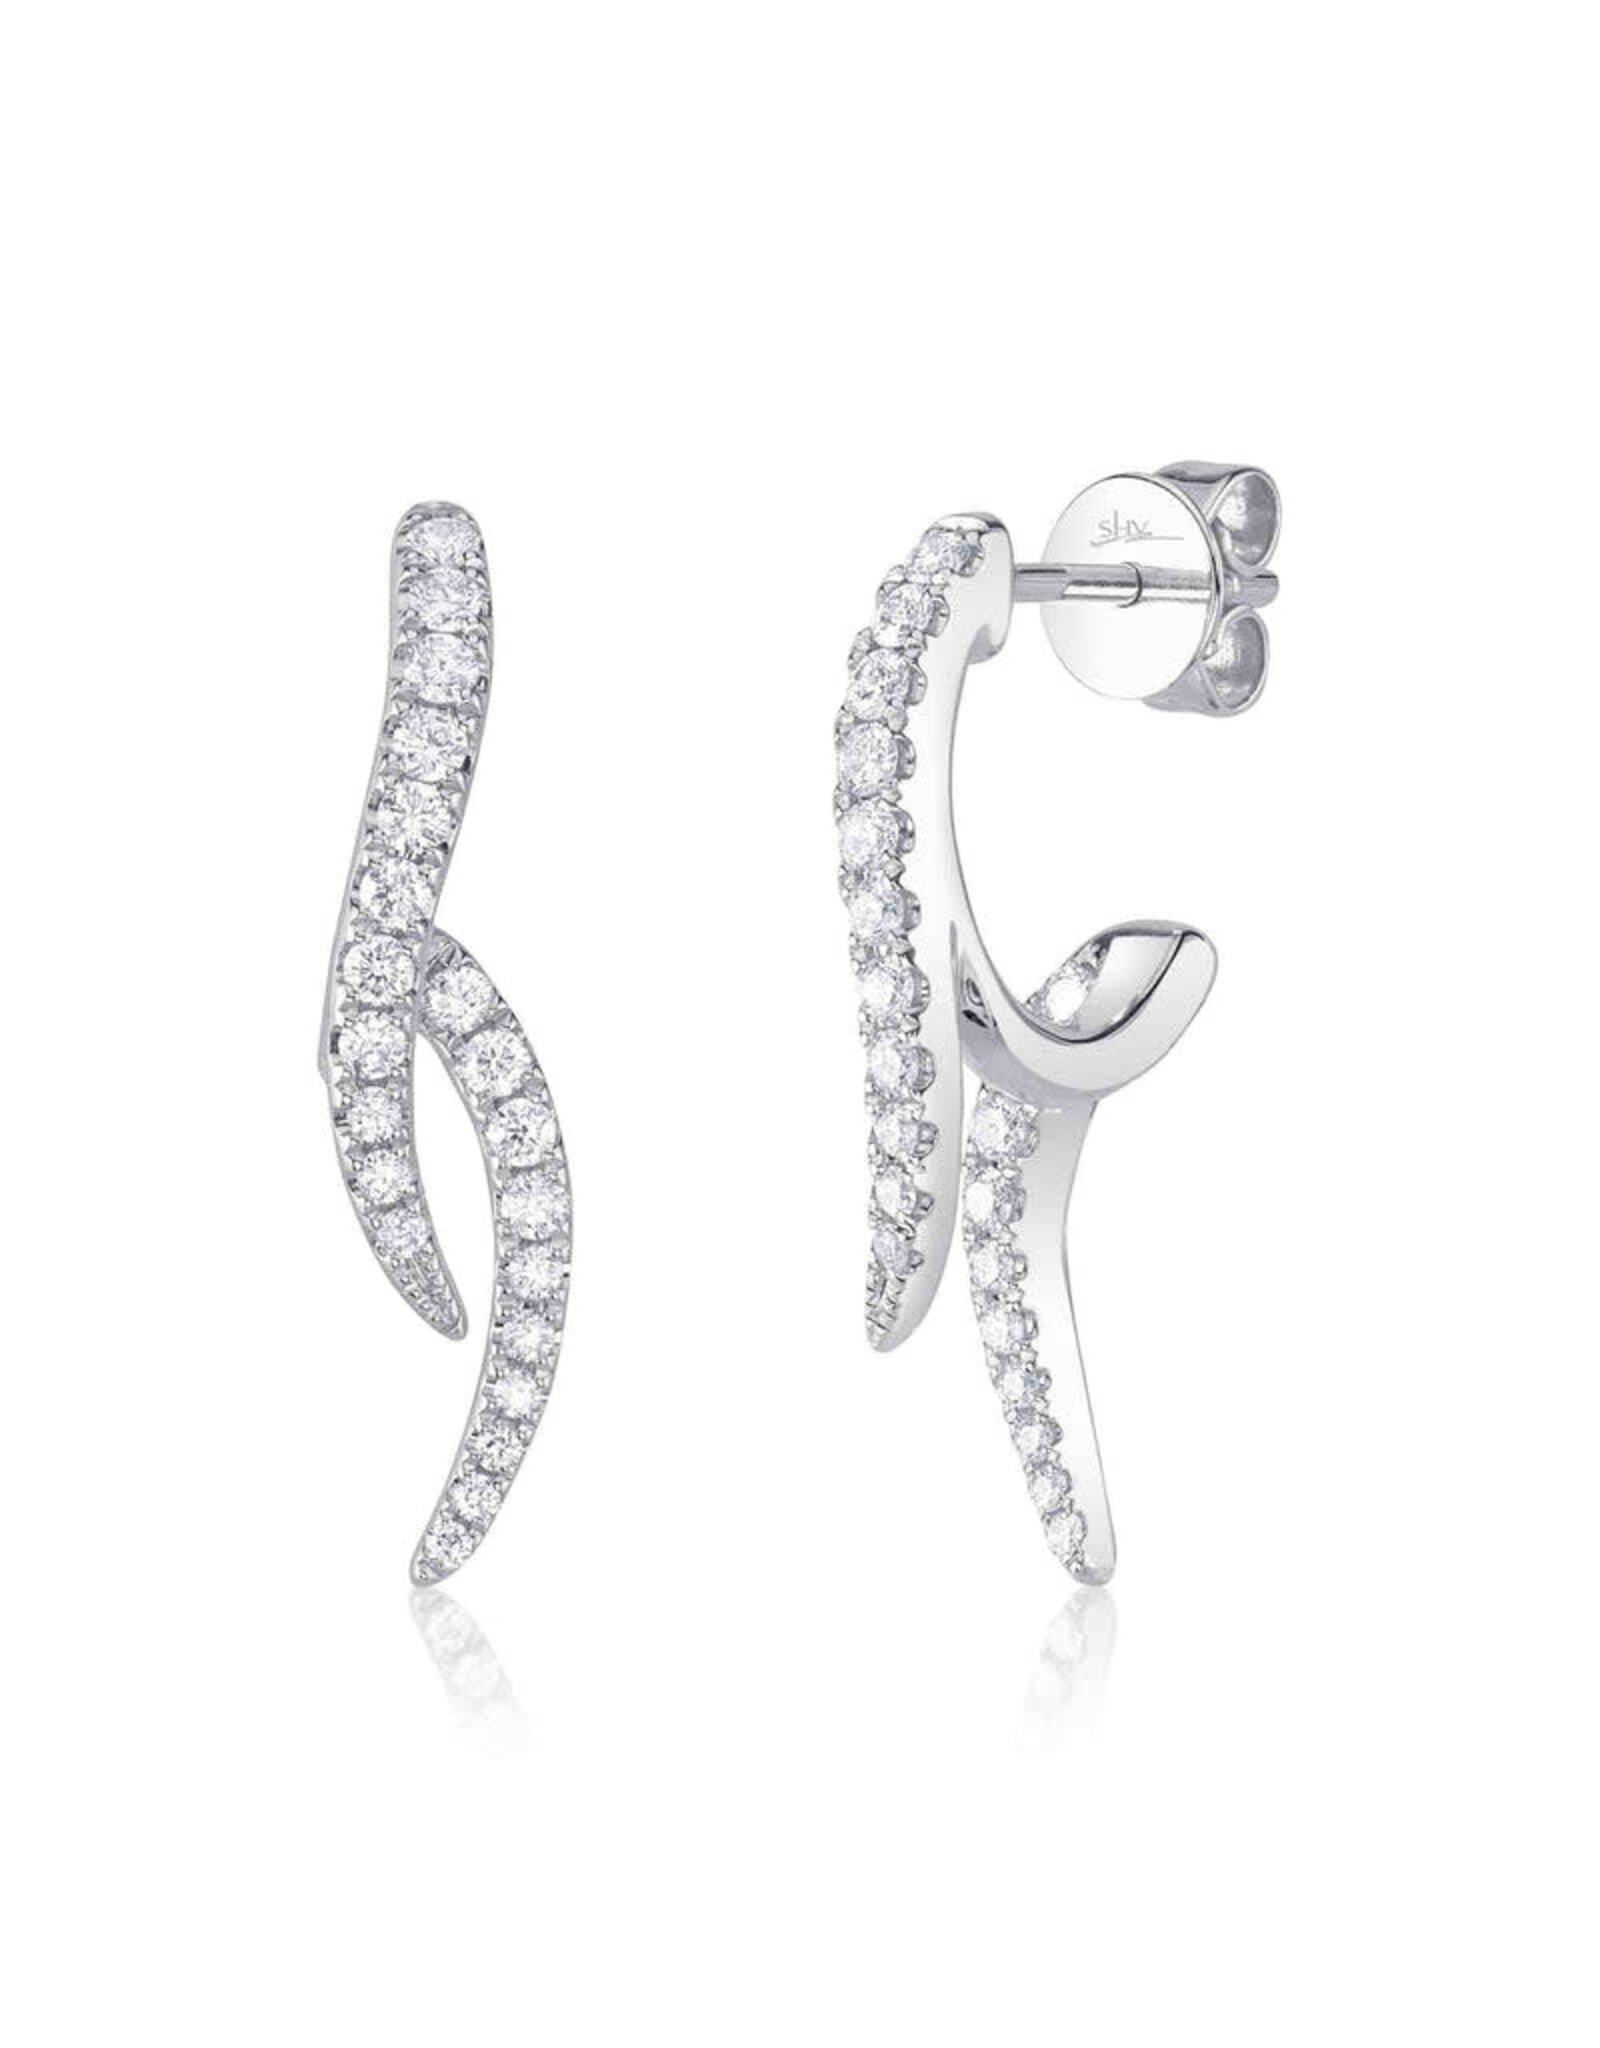 14K White Gold Diamond Fashion Earrings, D: 0.44ct